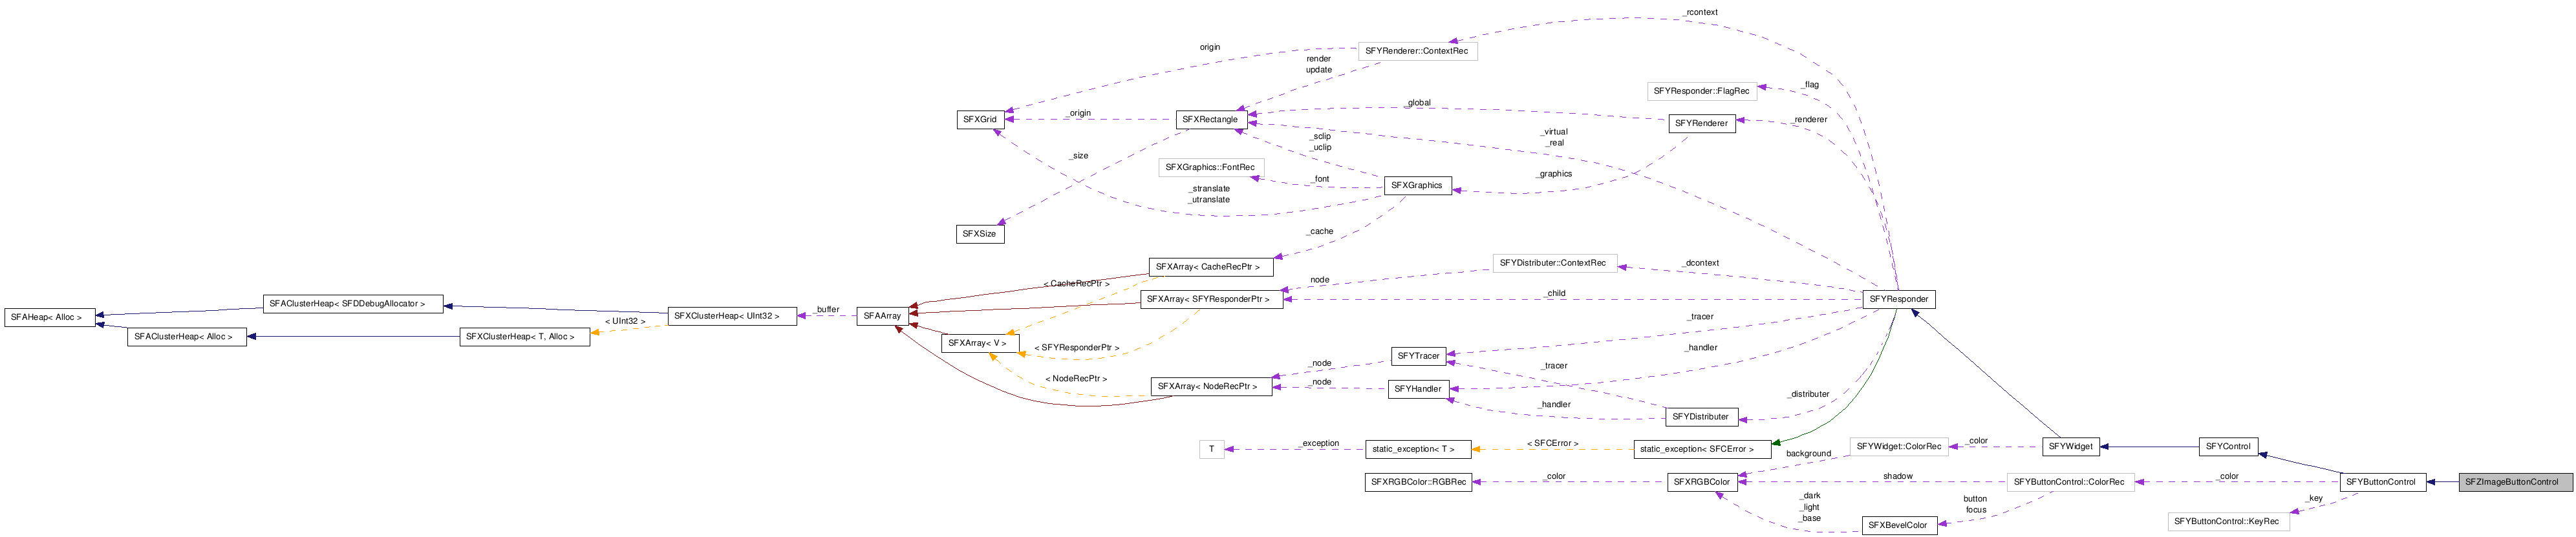  Collaboration diagram of SFZImageButtonControlClass